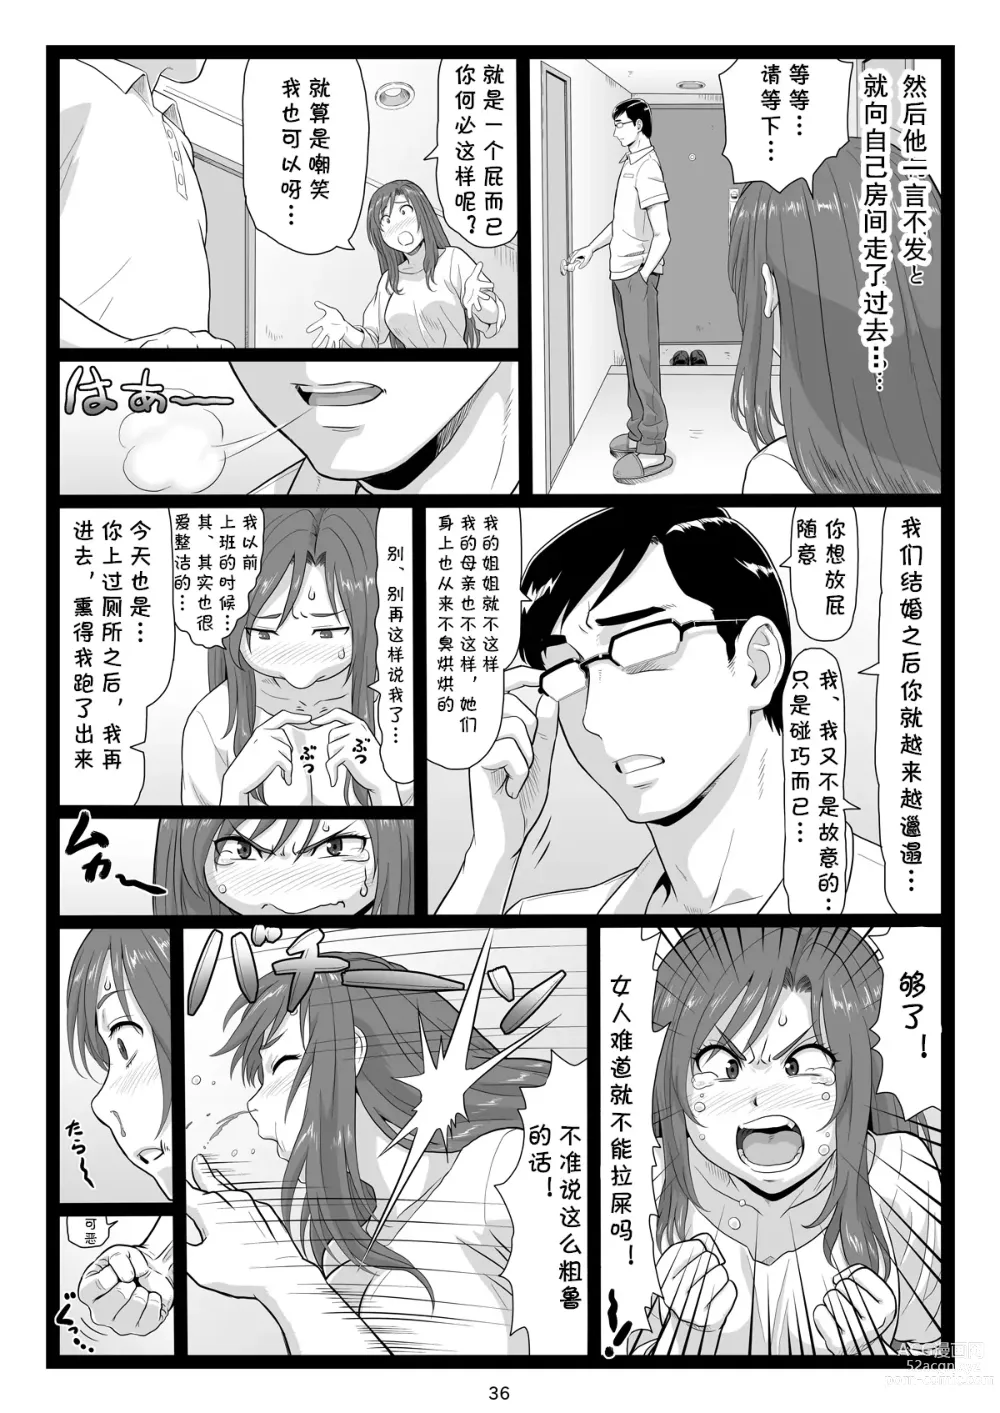 Page 36 of doujinshi Natsuyasumi no Omoide Gekan